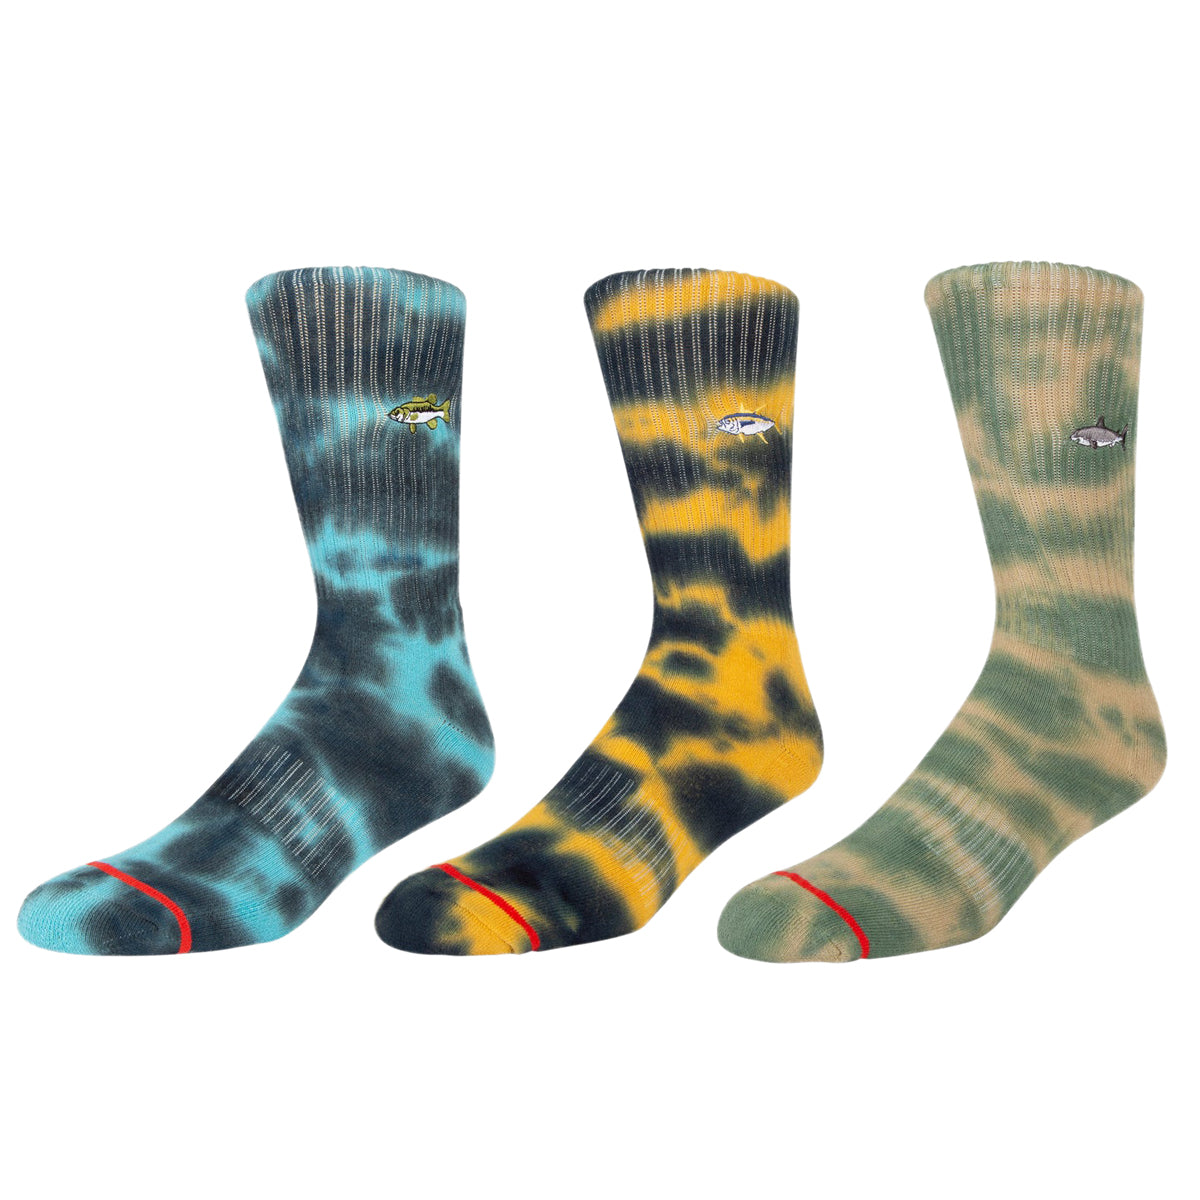 Salty Crew Fishsticks Tie Dye 3 Pack of Socks - Assorted image 1